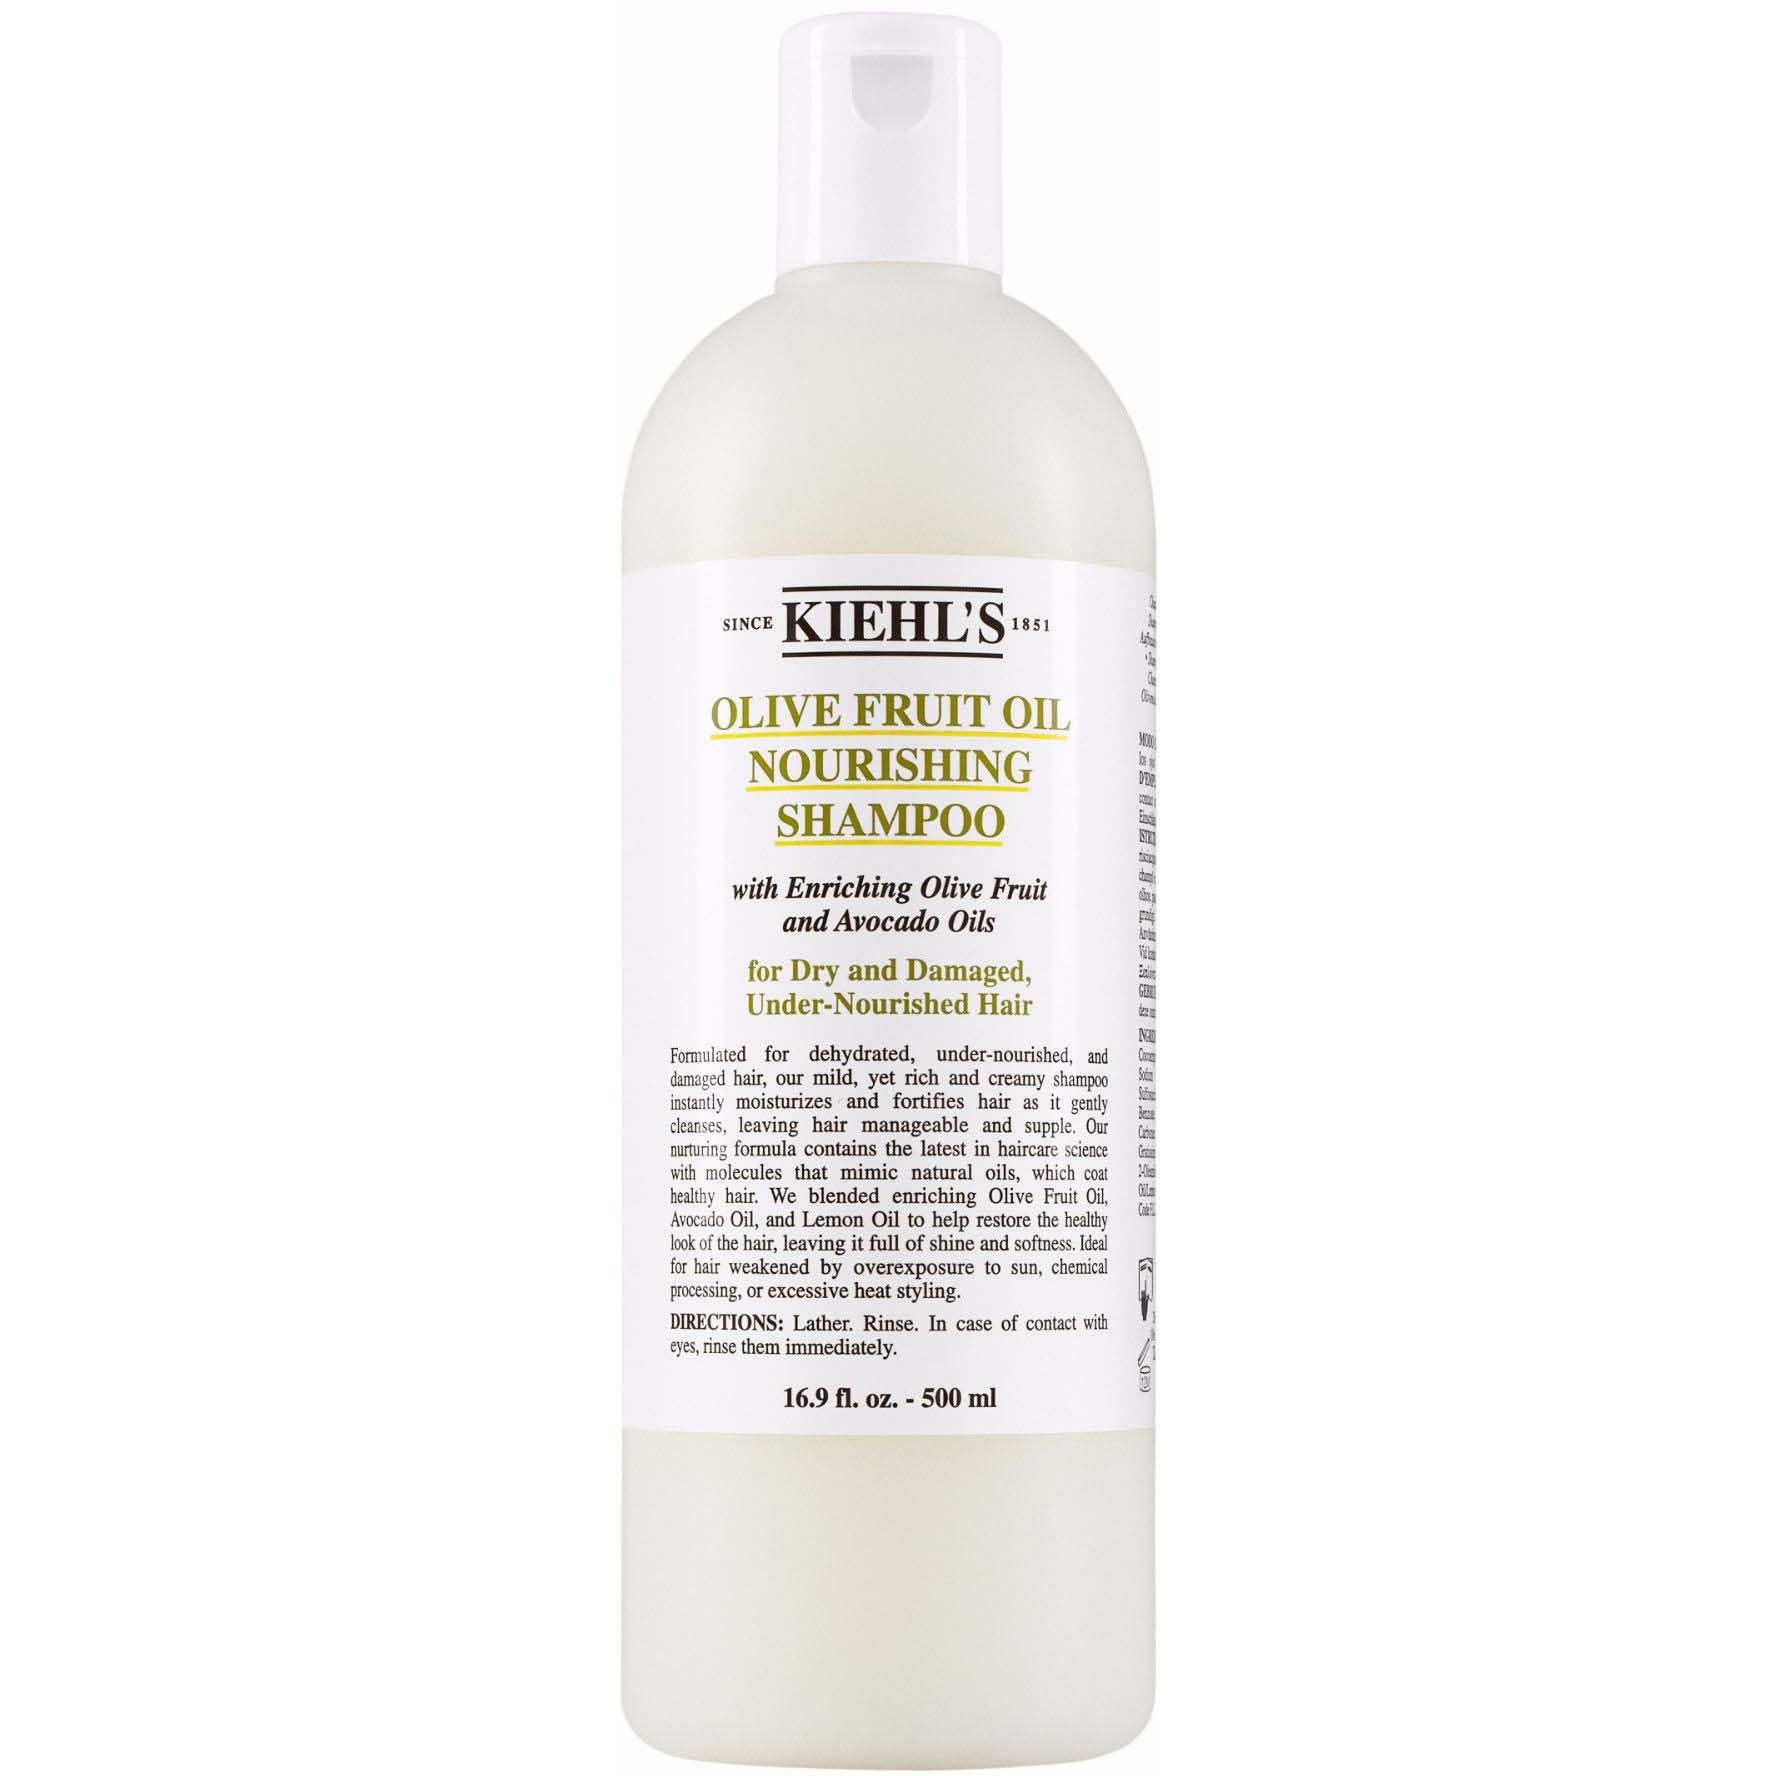 Kiehls Olive Fruit Oil Nourishing Shampoo 500 ml